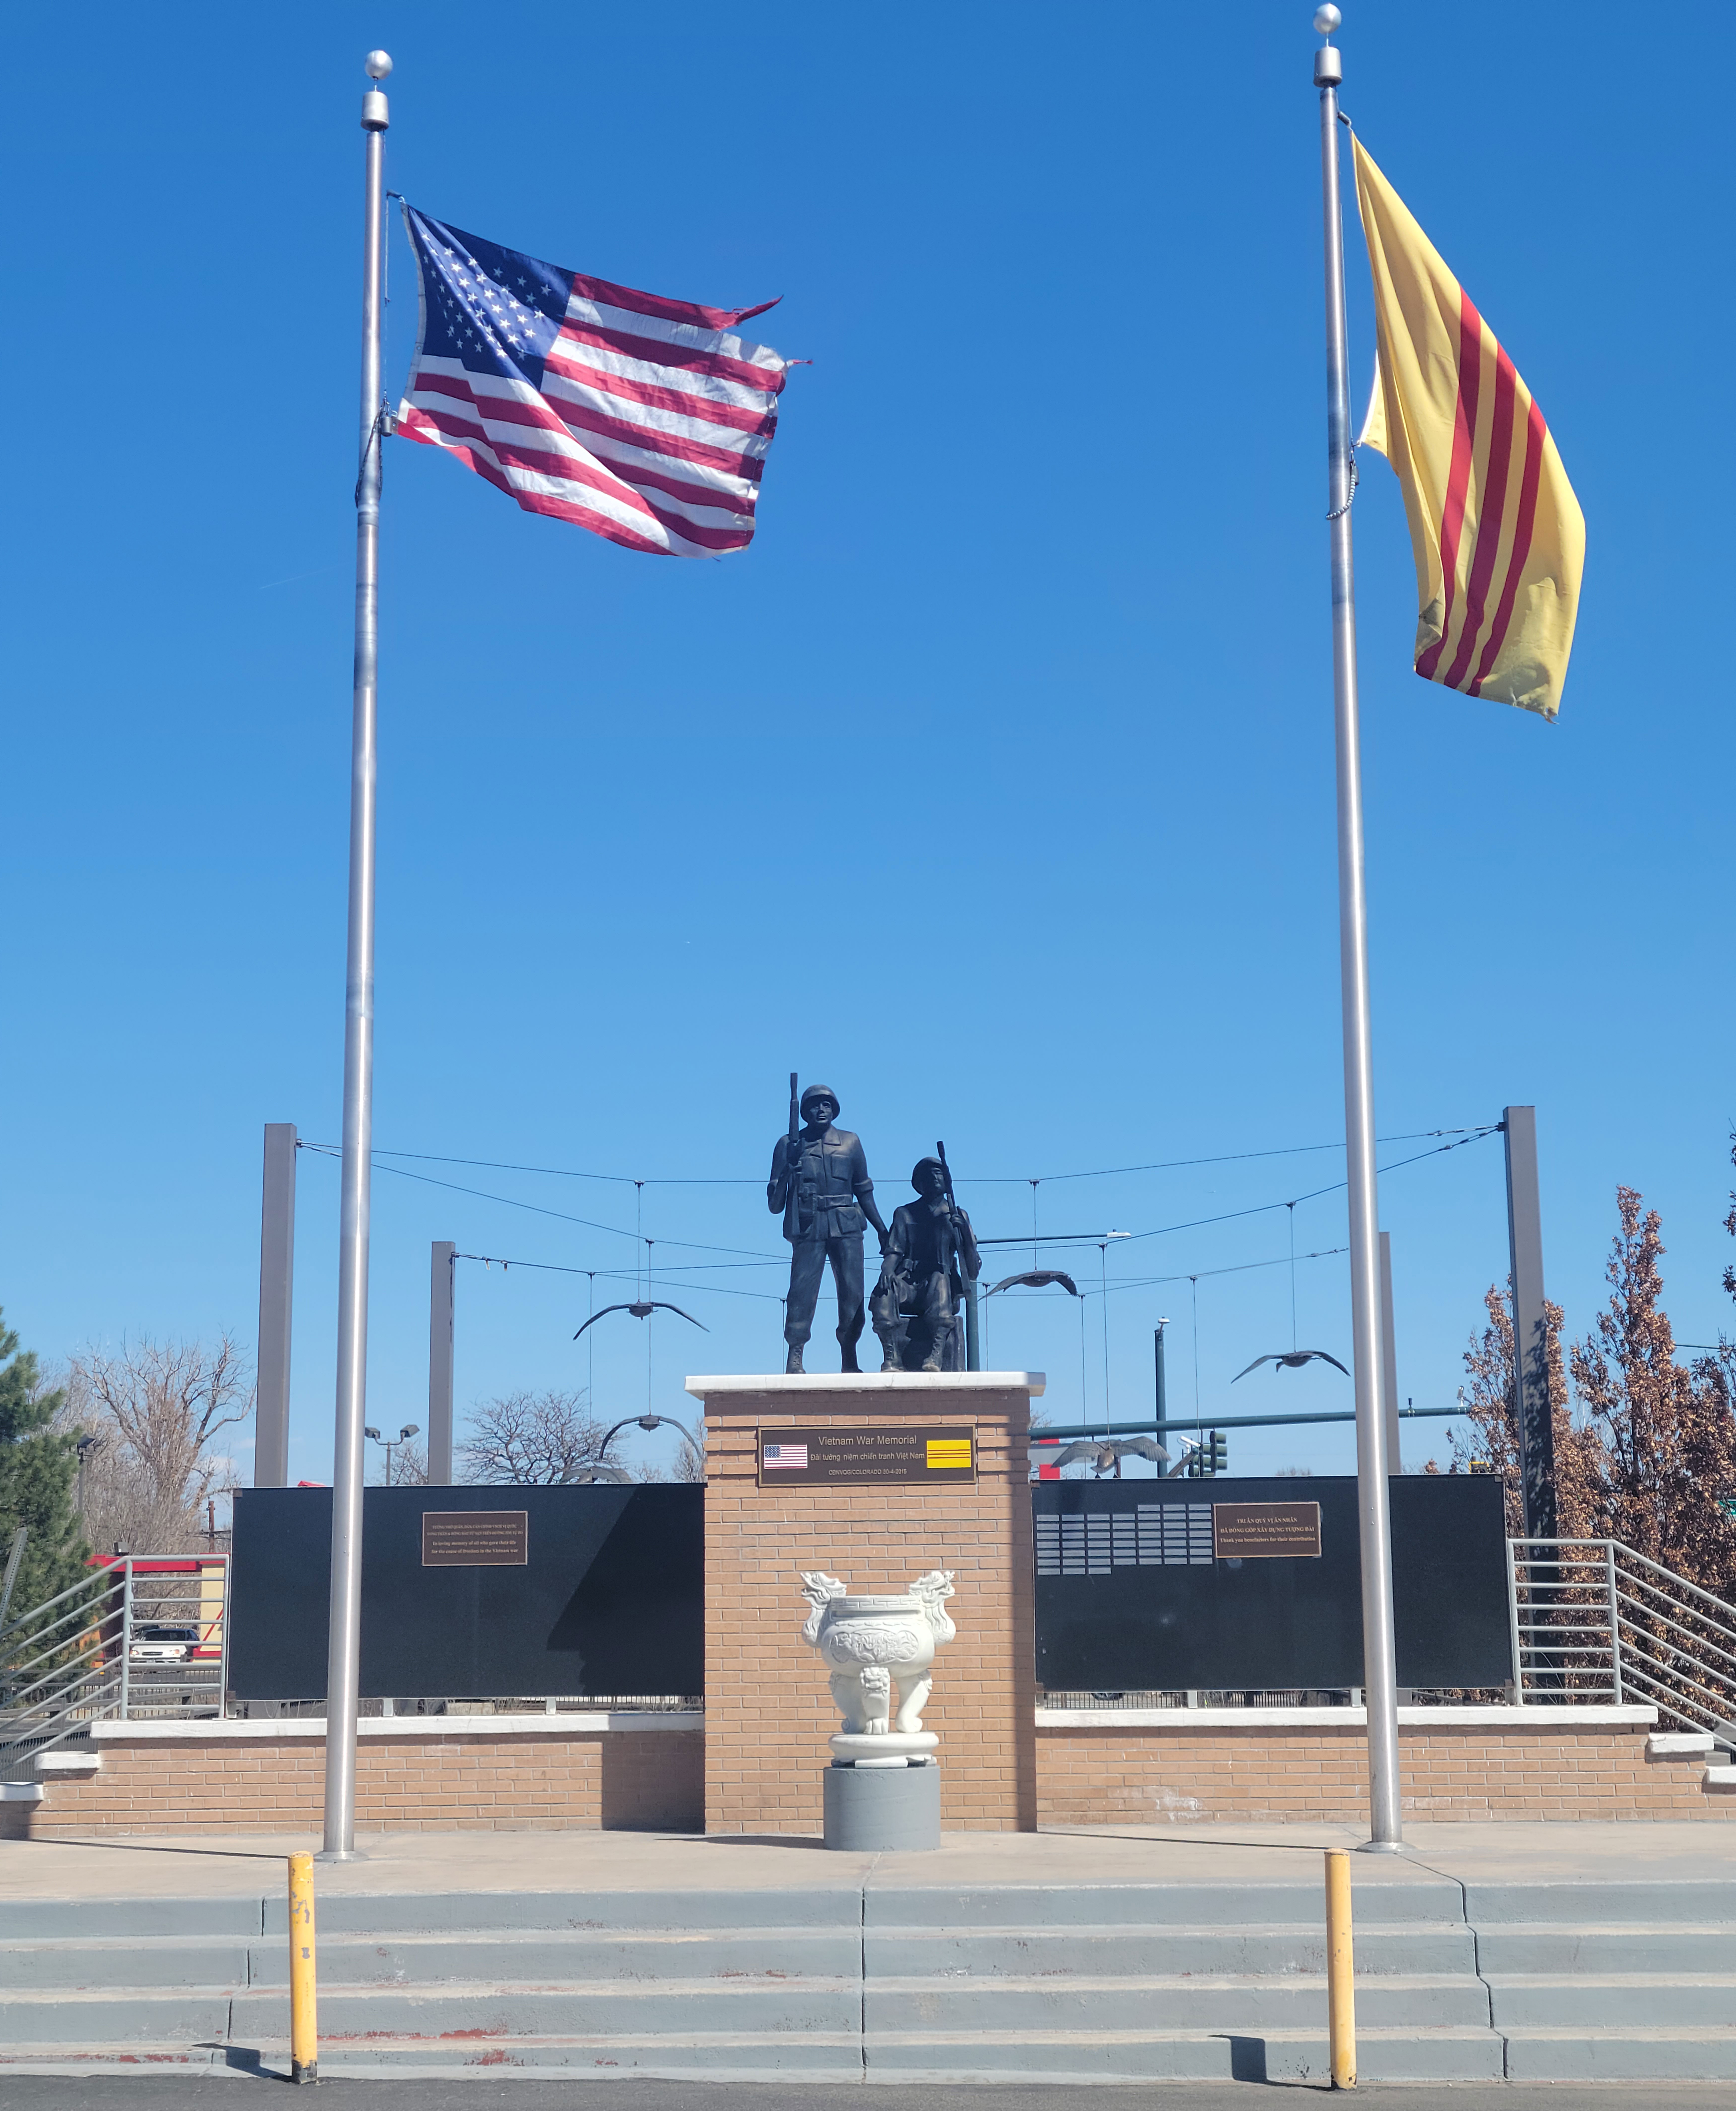 The Vietnam Memorial statue in Denver.